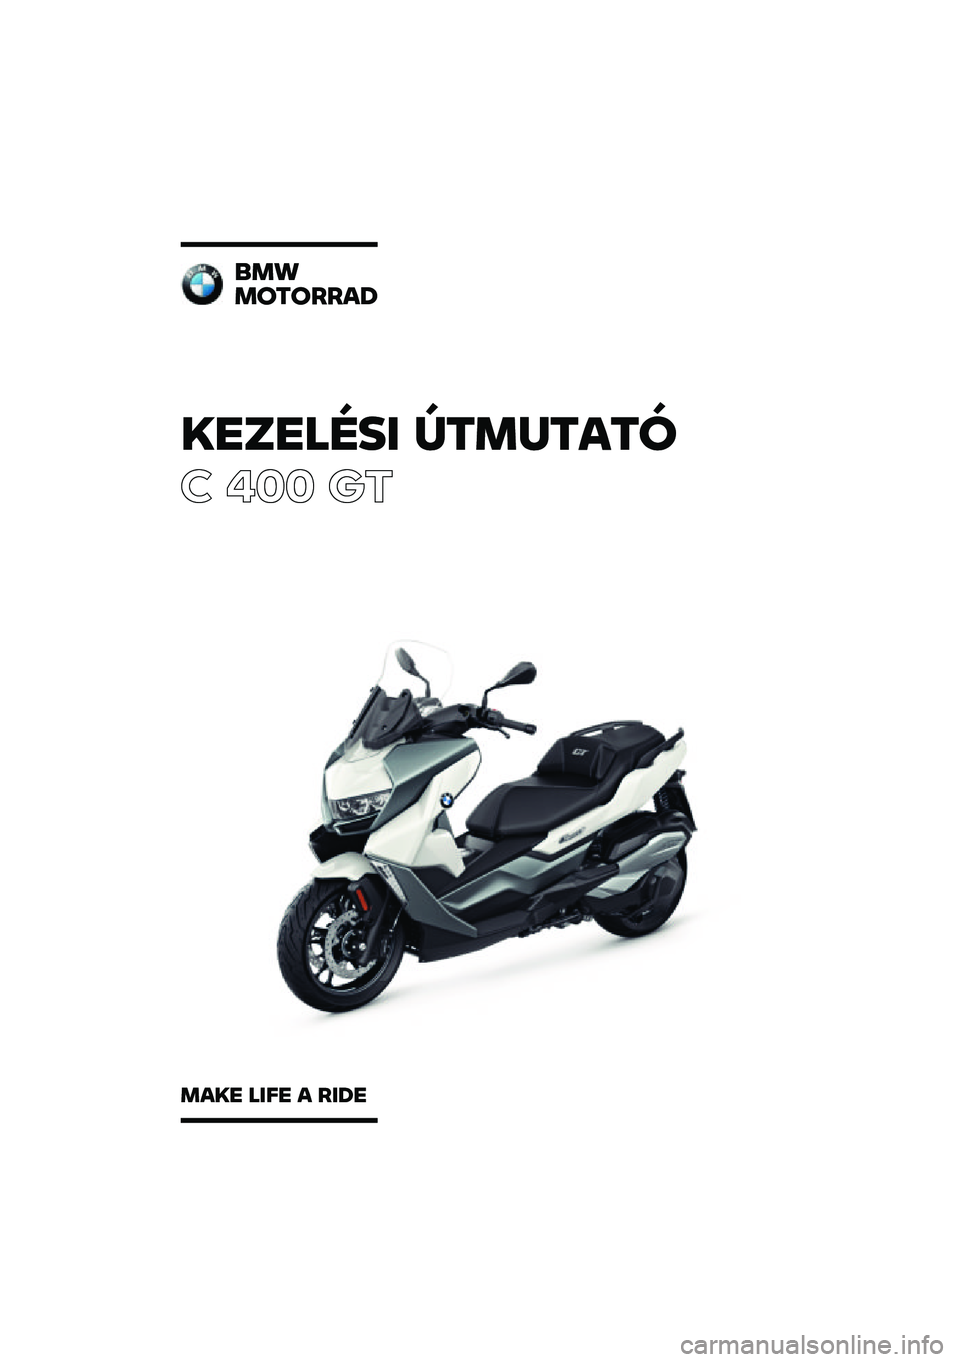 BMW MOTORRAD C 400 GT 2020  Kezelési útmutató (in Hungarian) �������\b�	 �
�\f�
��\f��\f�
� ��� ��\b
��
�
�
��\f�����
�
��� ��	�� � ��	�� 